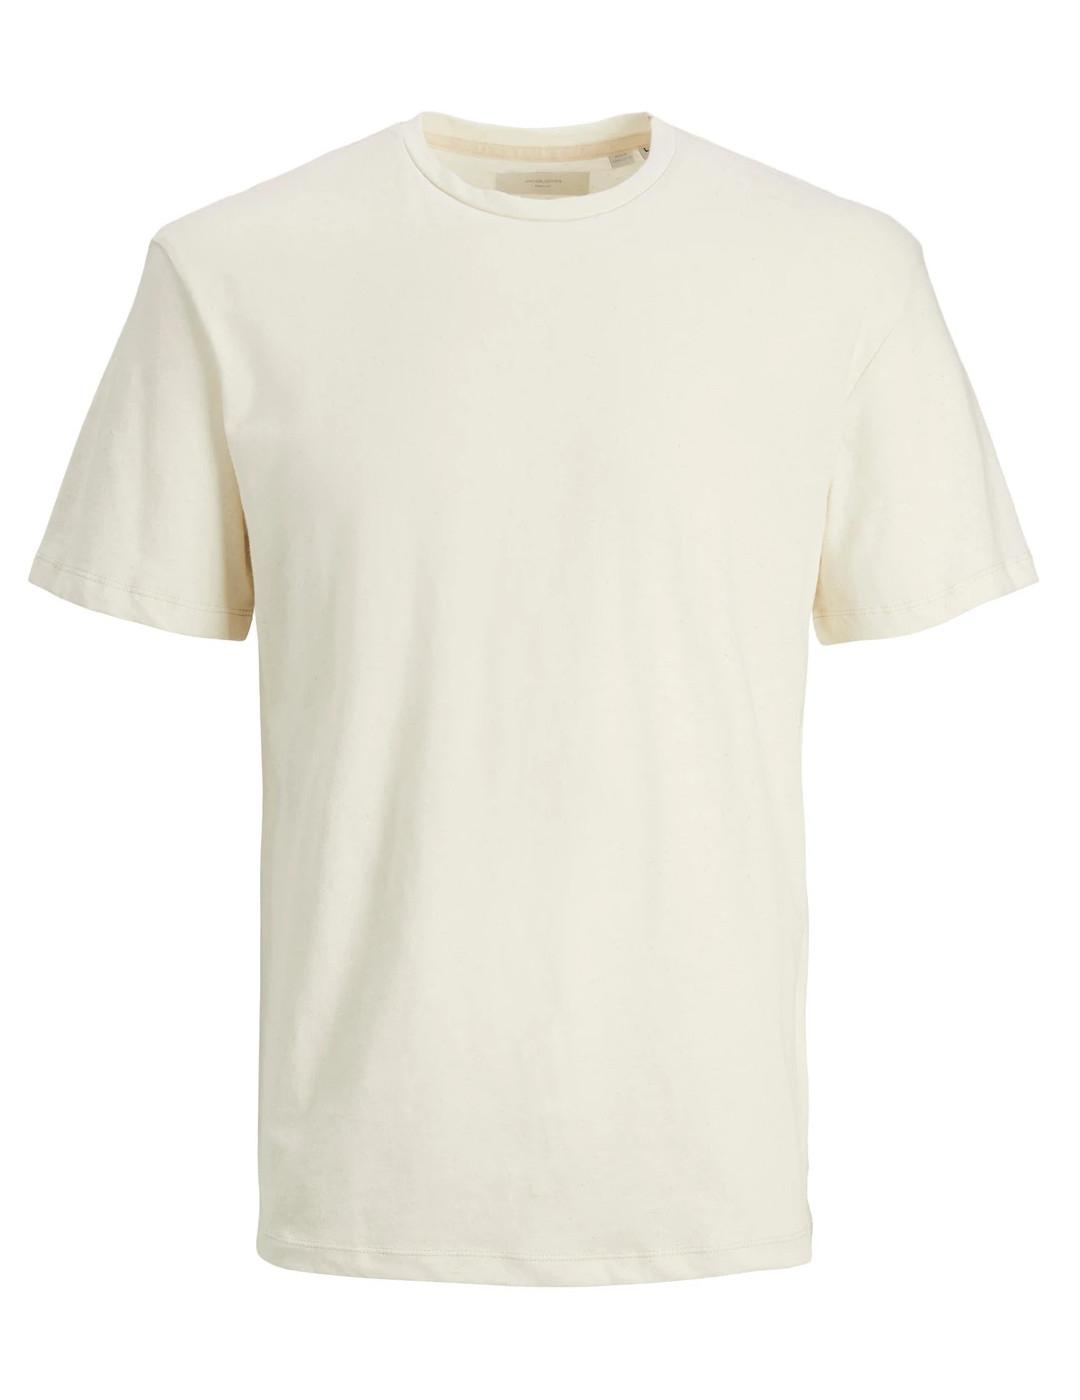 Camiseta Jack&Jones Soft blanco roto manga corta para hombre